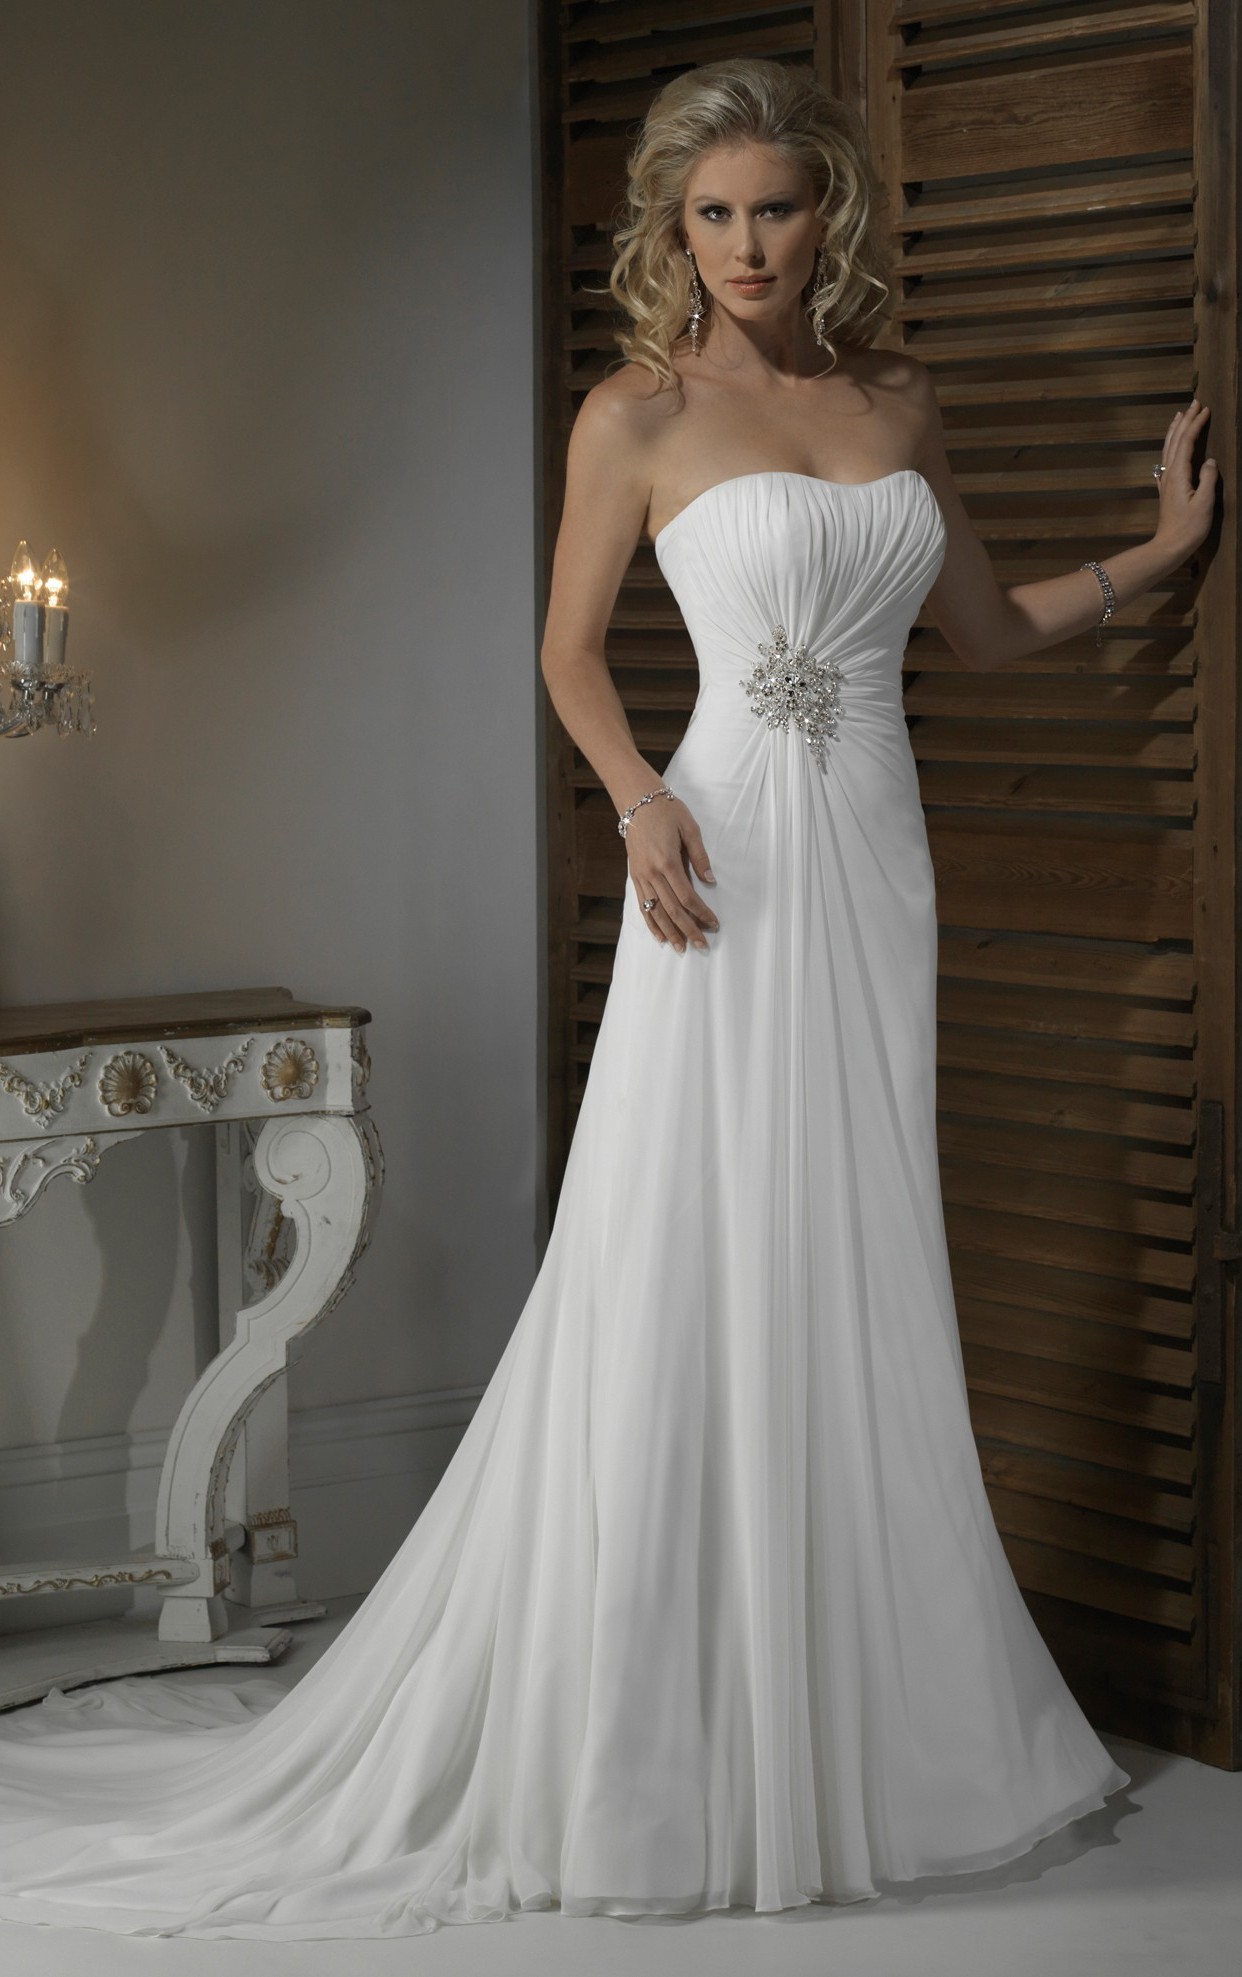 20 Superb Strapless Wedding Dresses Ideas Wohh Wedding 2369